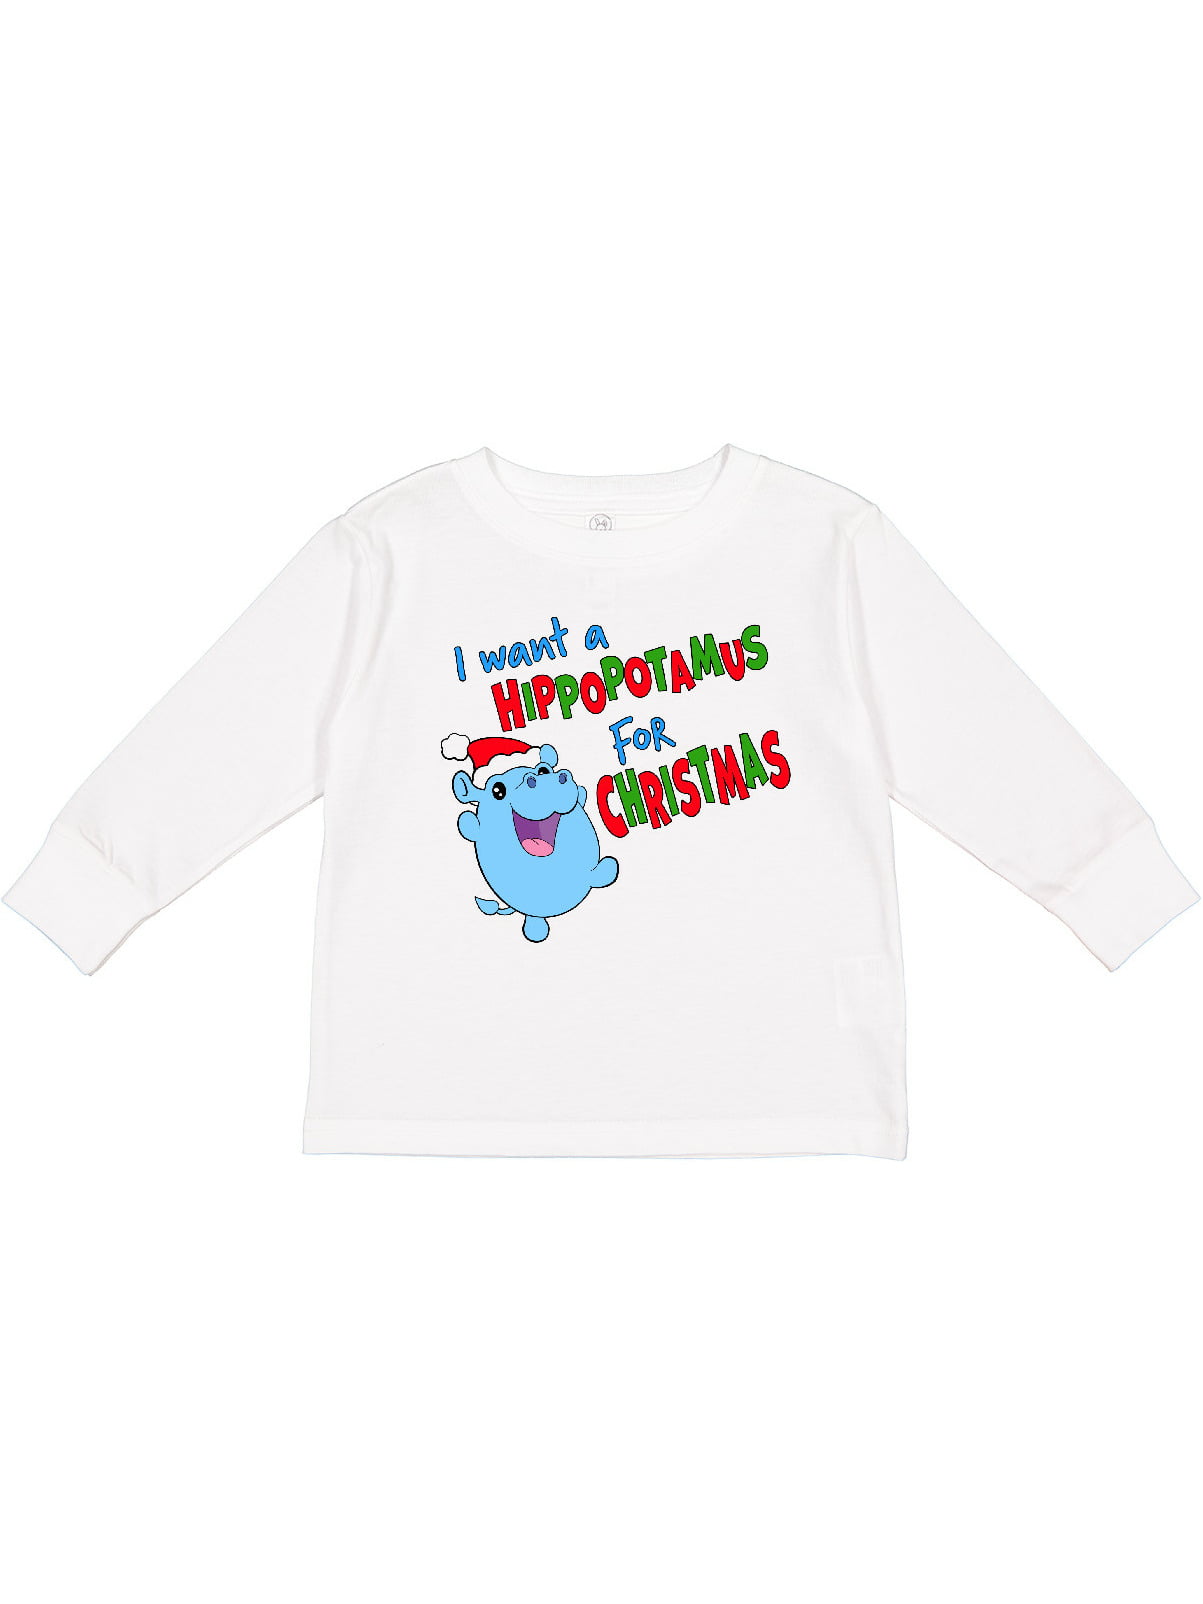 Toddler Boys Girls Kids Cute Tops Hungry Hippo Print Short Sleeve Fashion White T Shirt Blouse 